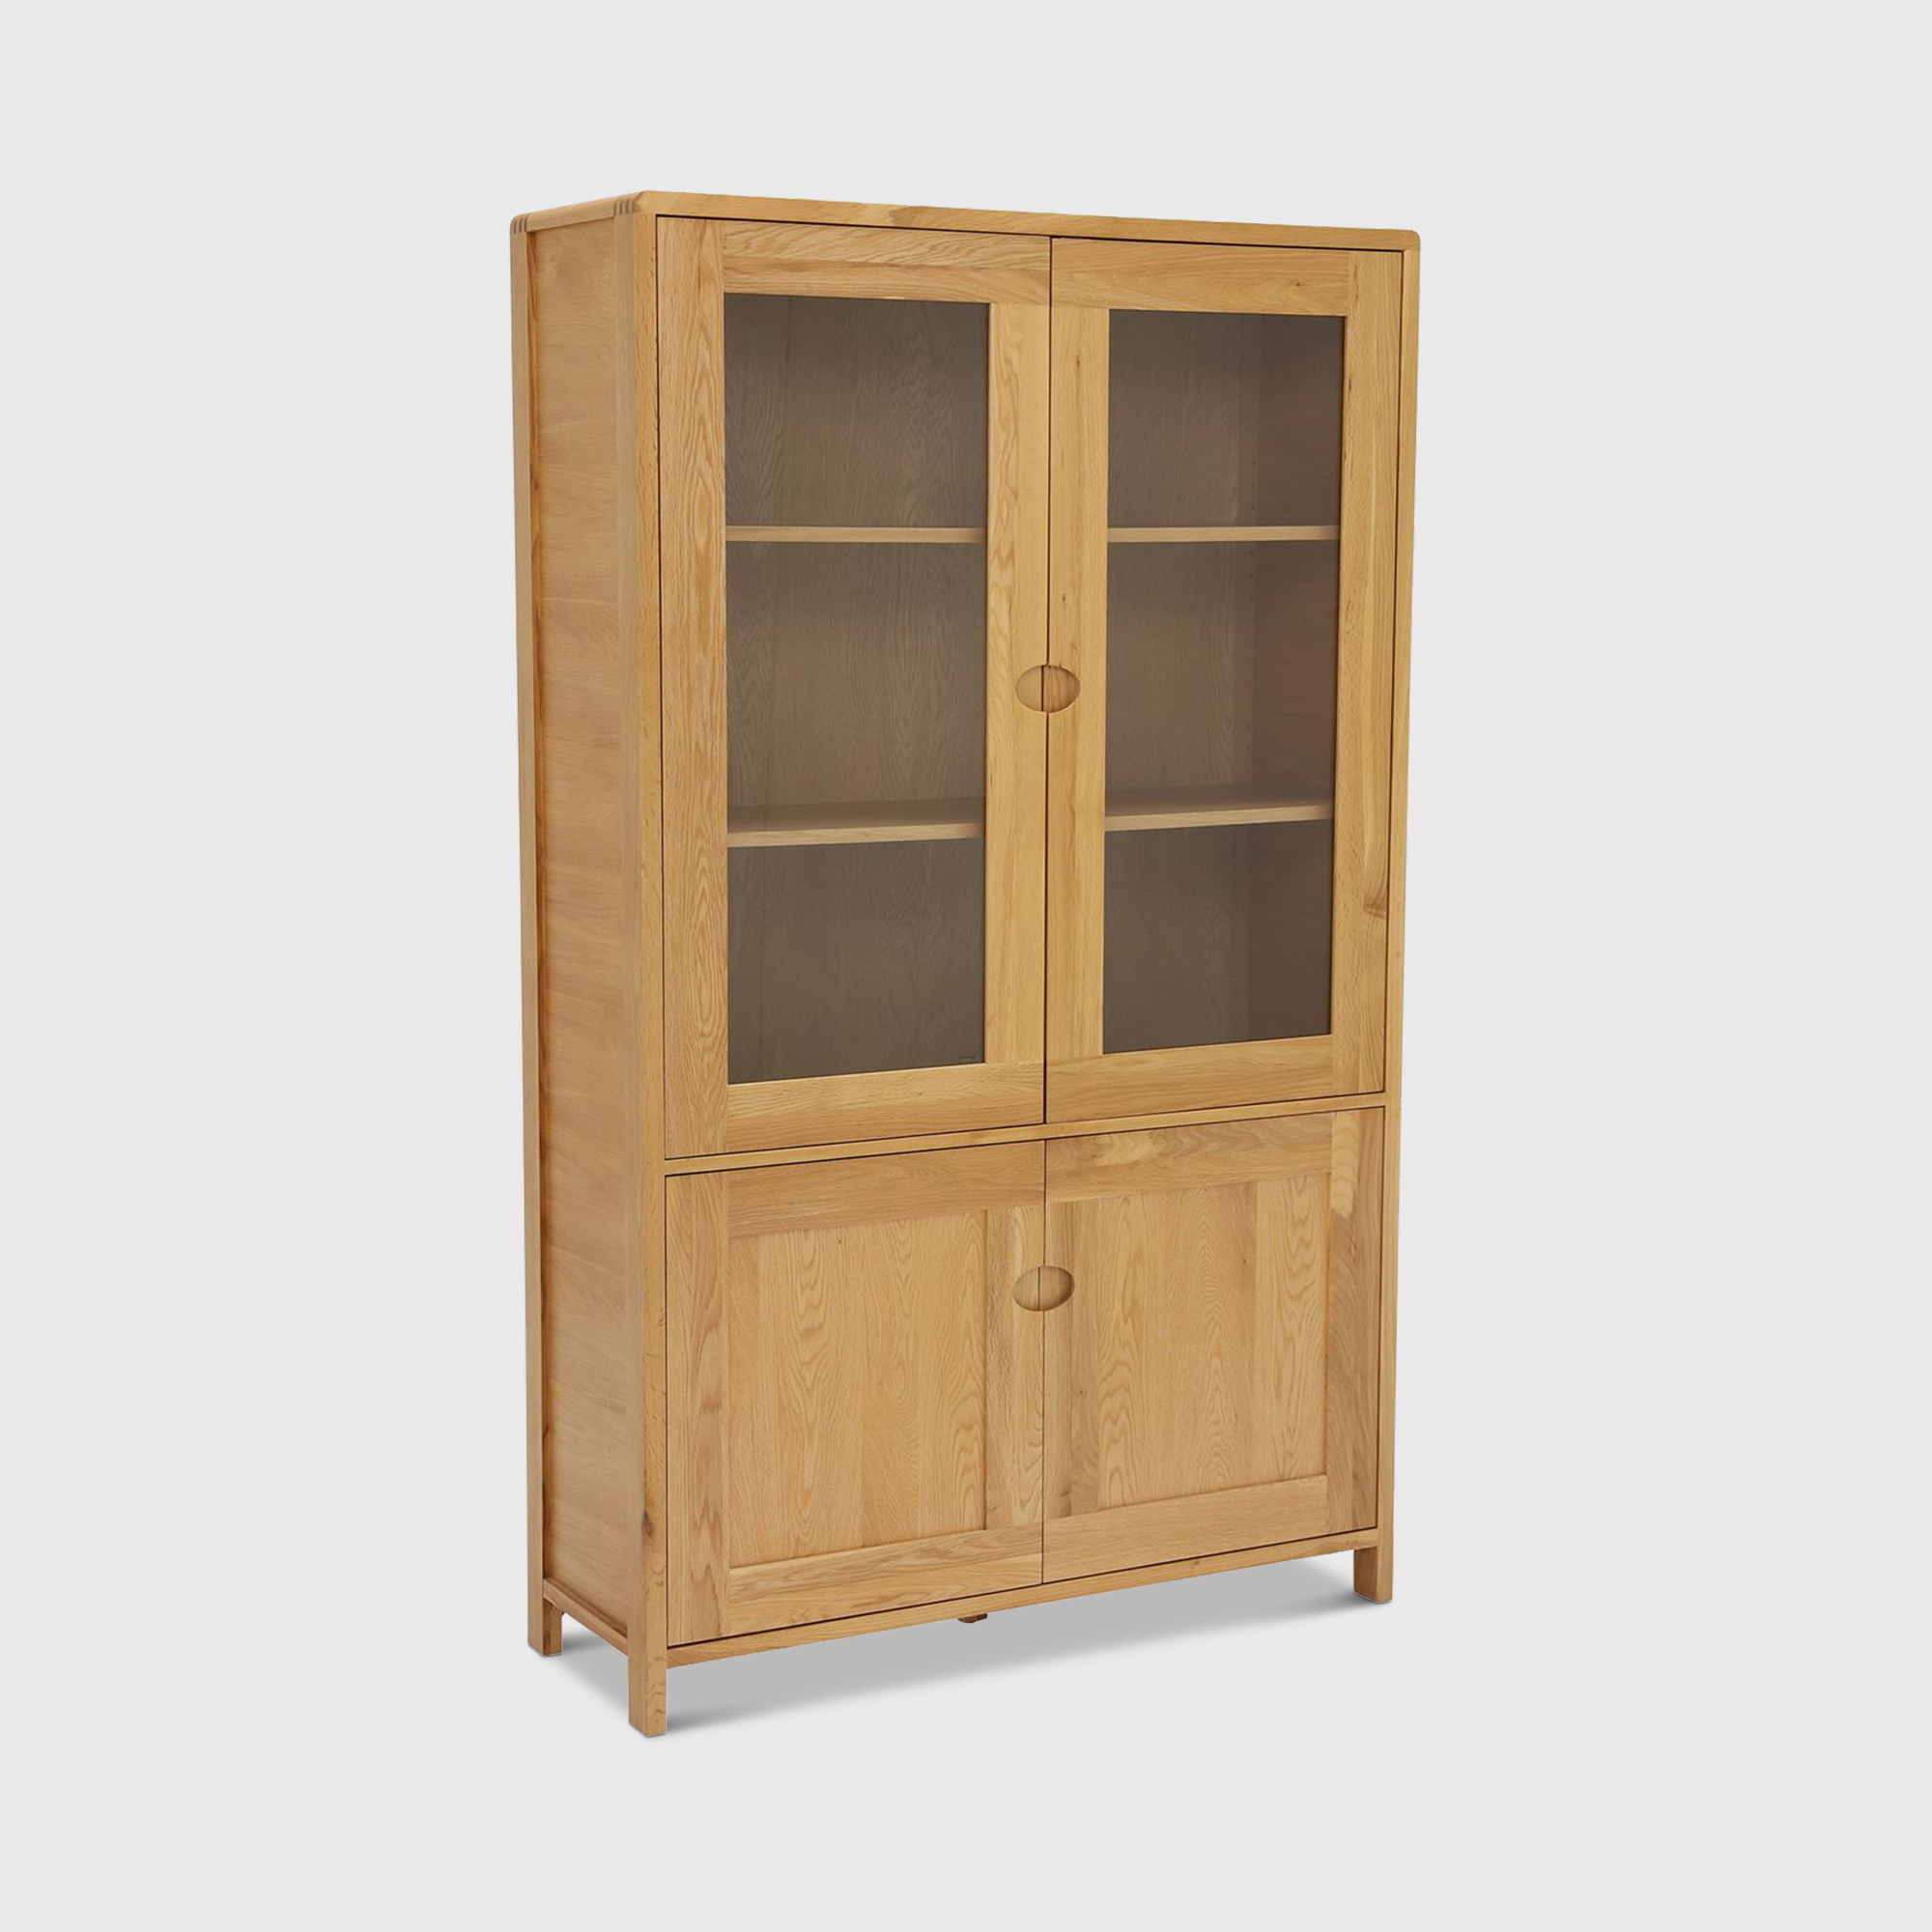 Ercol Bosco Display Cabinet, Neutral Oak | Barker & Stonehouse